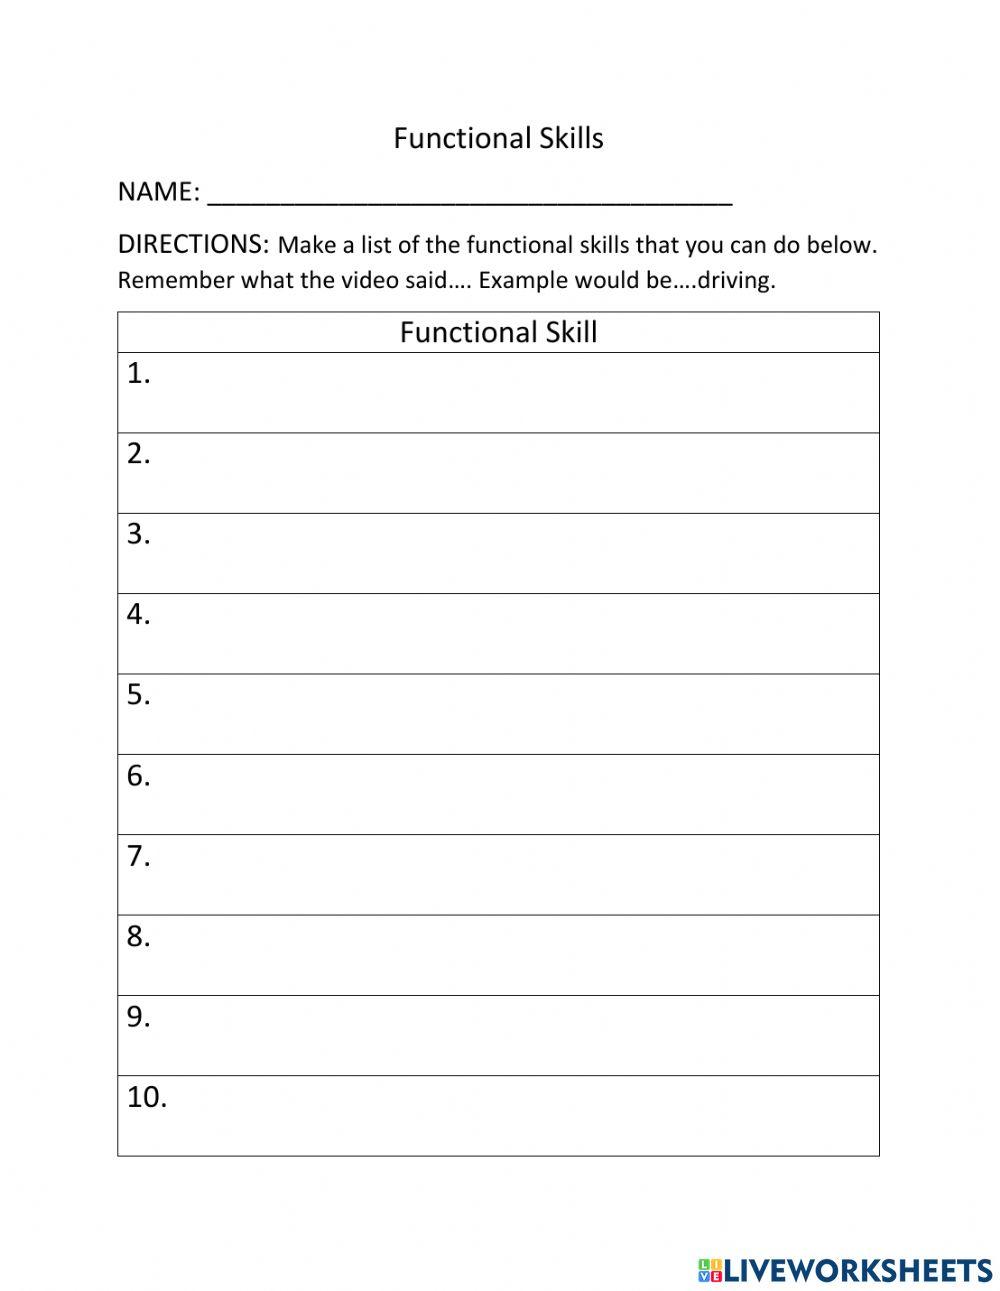 Functional Skills List - Transition